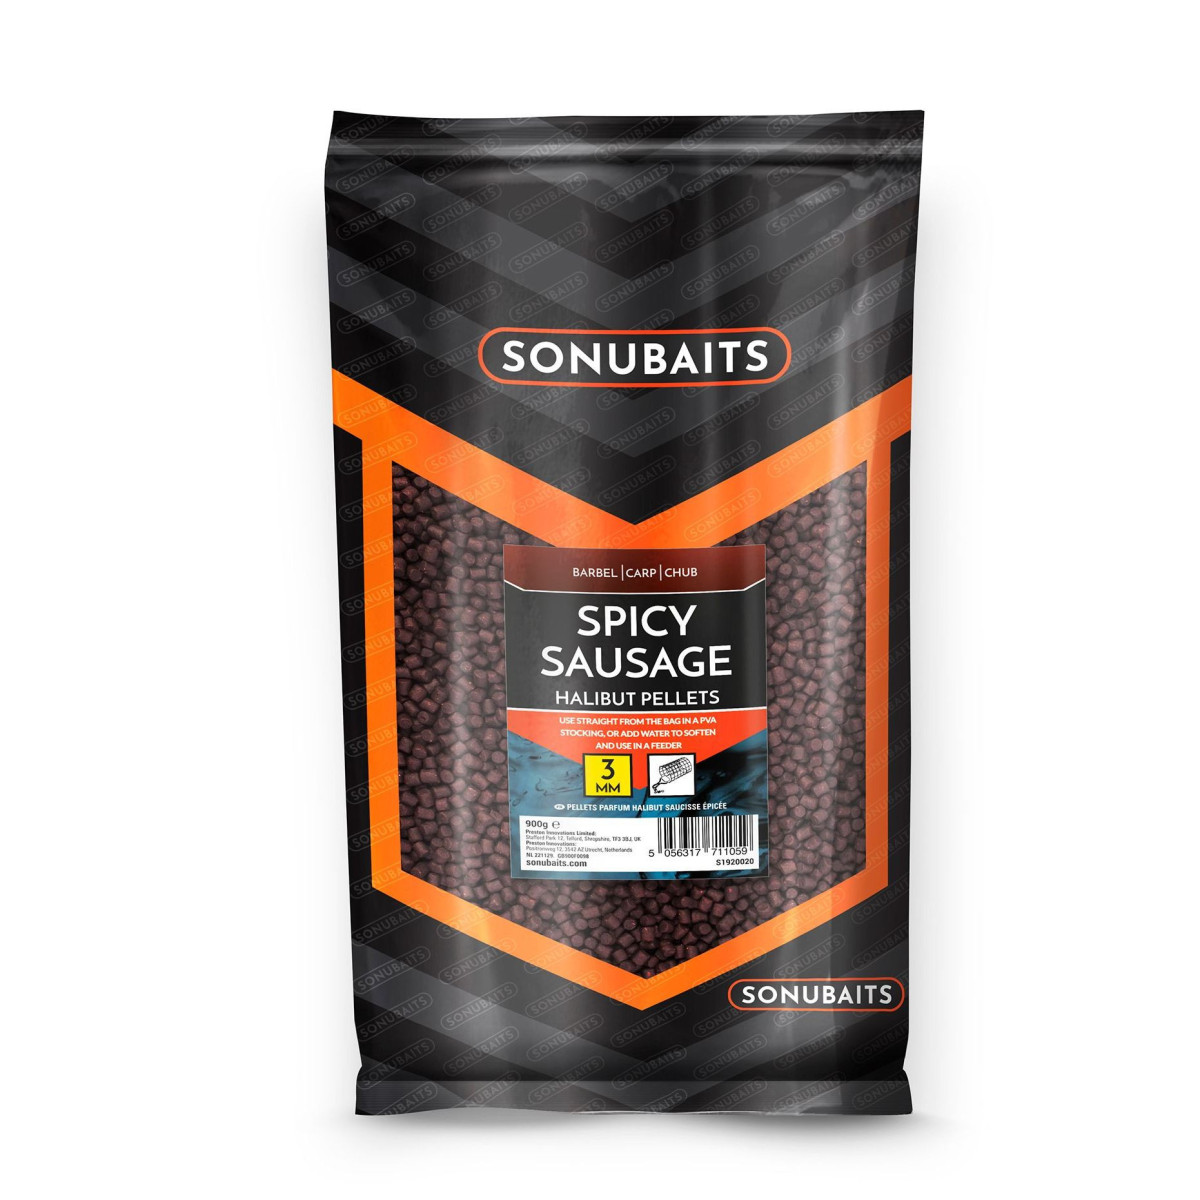 Sonubaits Spicy Sausage Halibut Pellets - 3mm